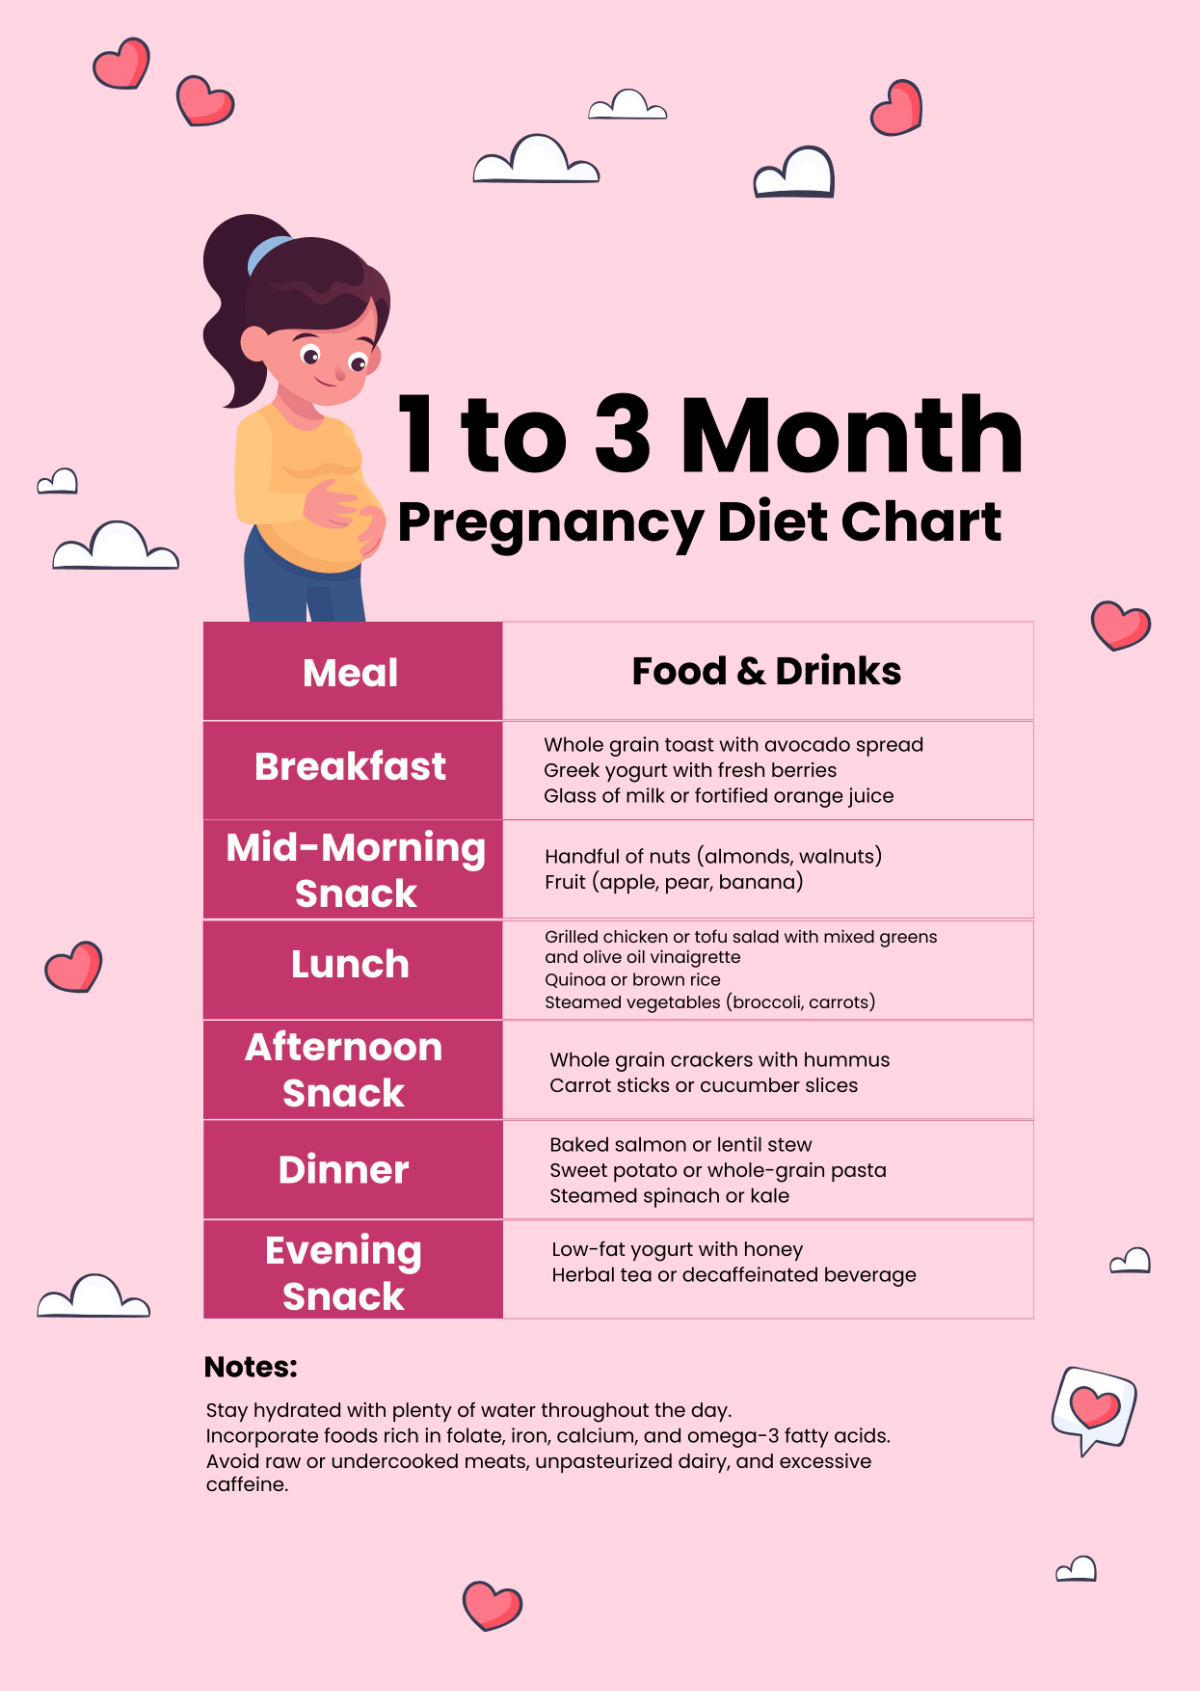 1 to 3 Month Pregnancy Diet Chart